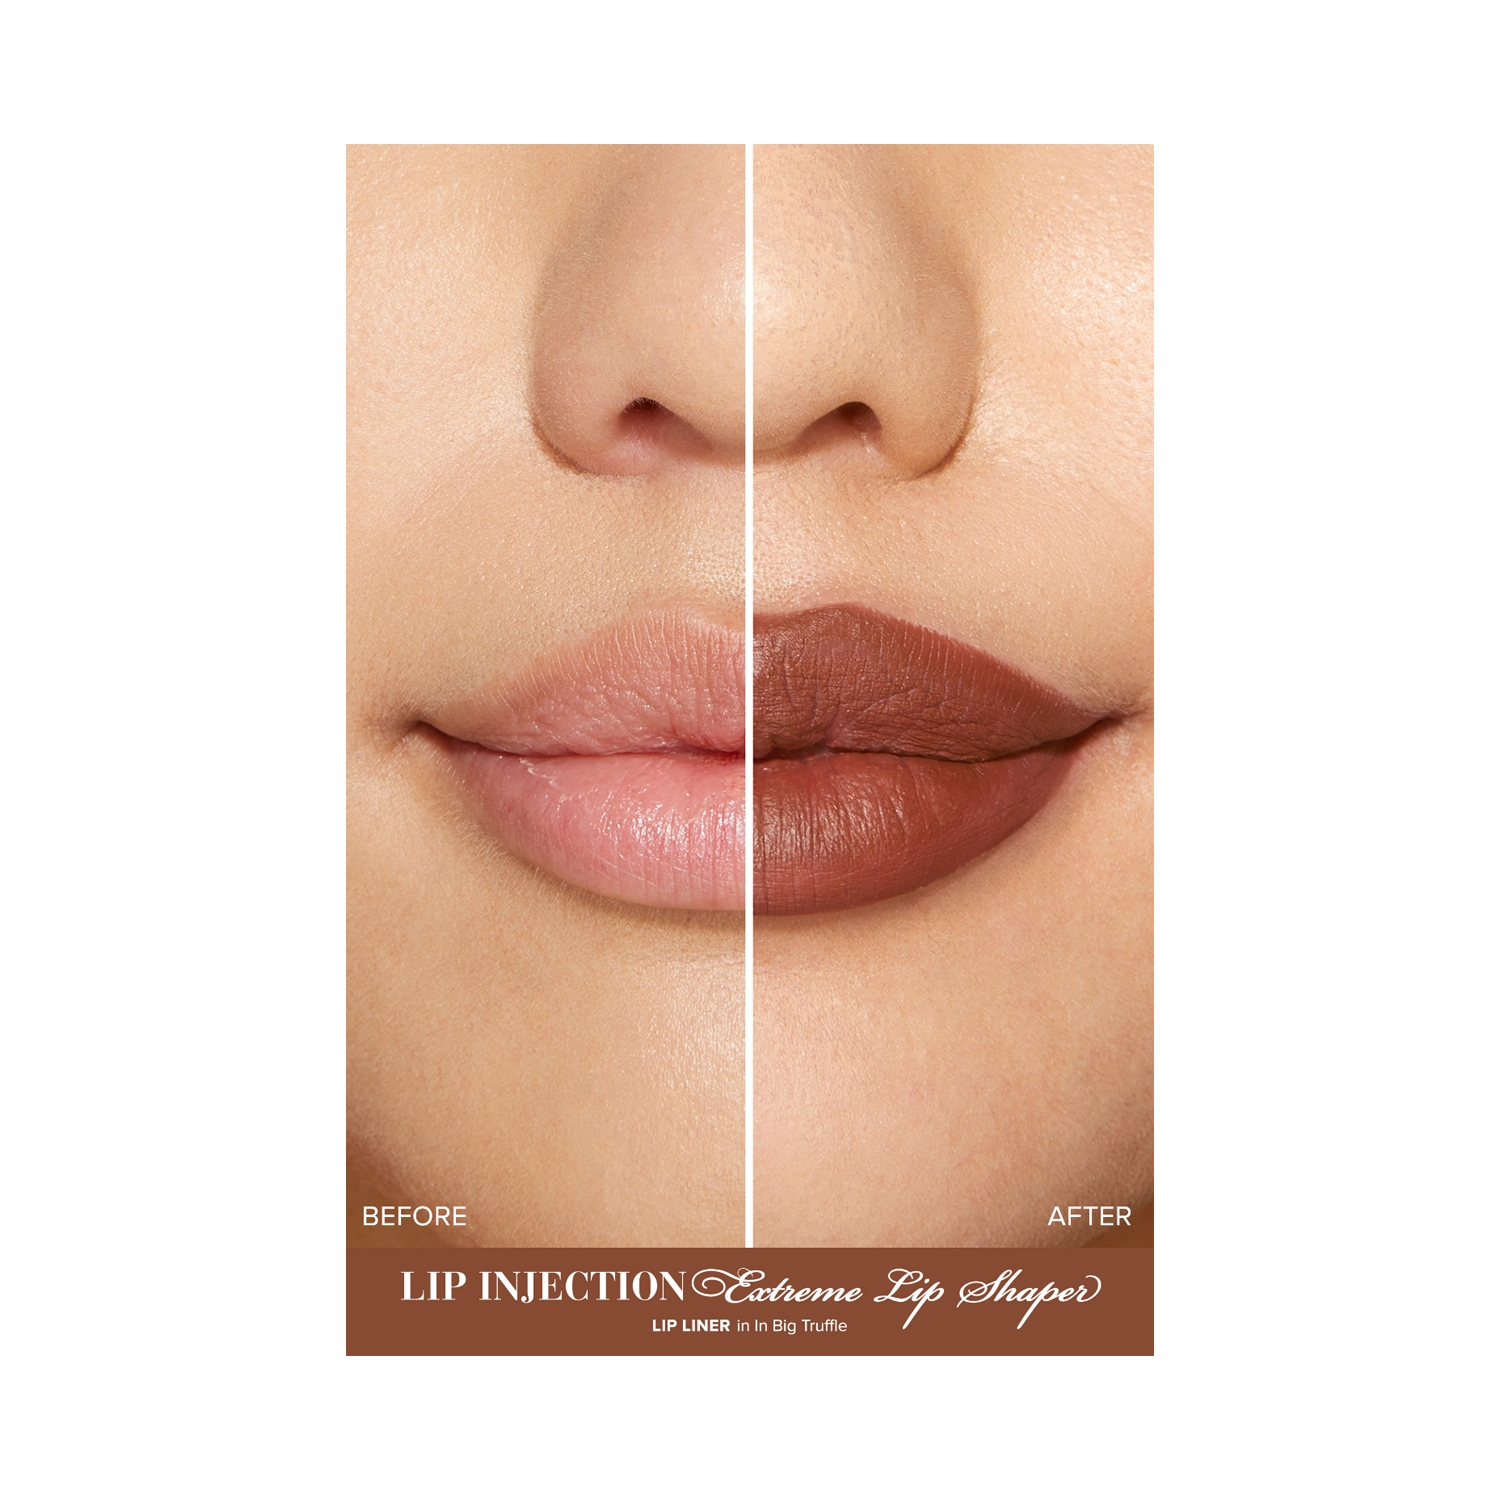 Lip Injection Extreme Lip Shaper Lip Liner